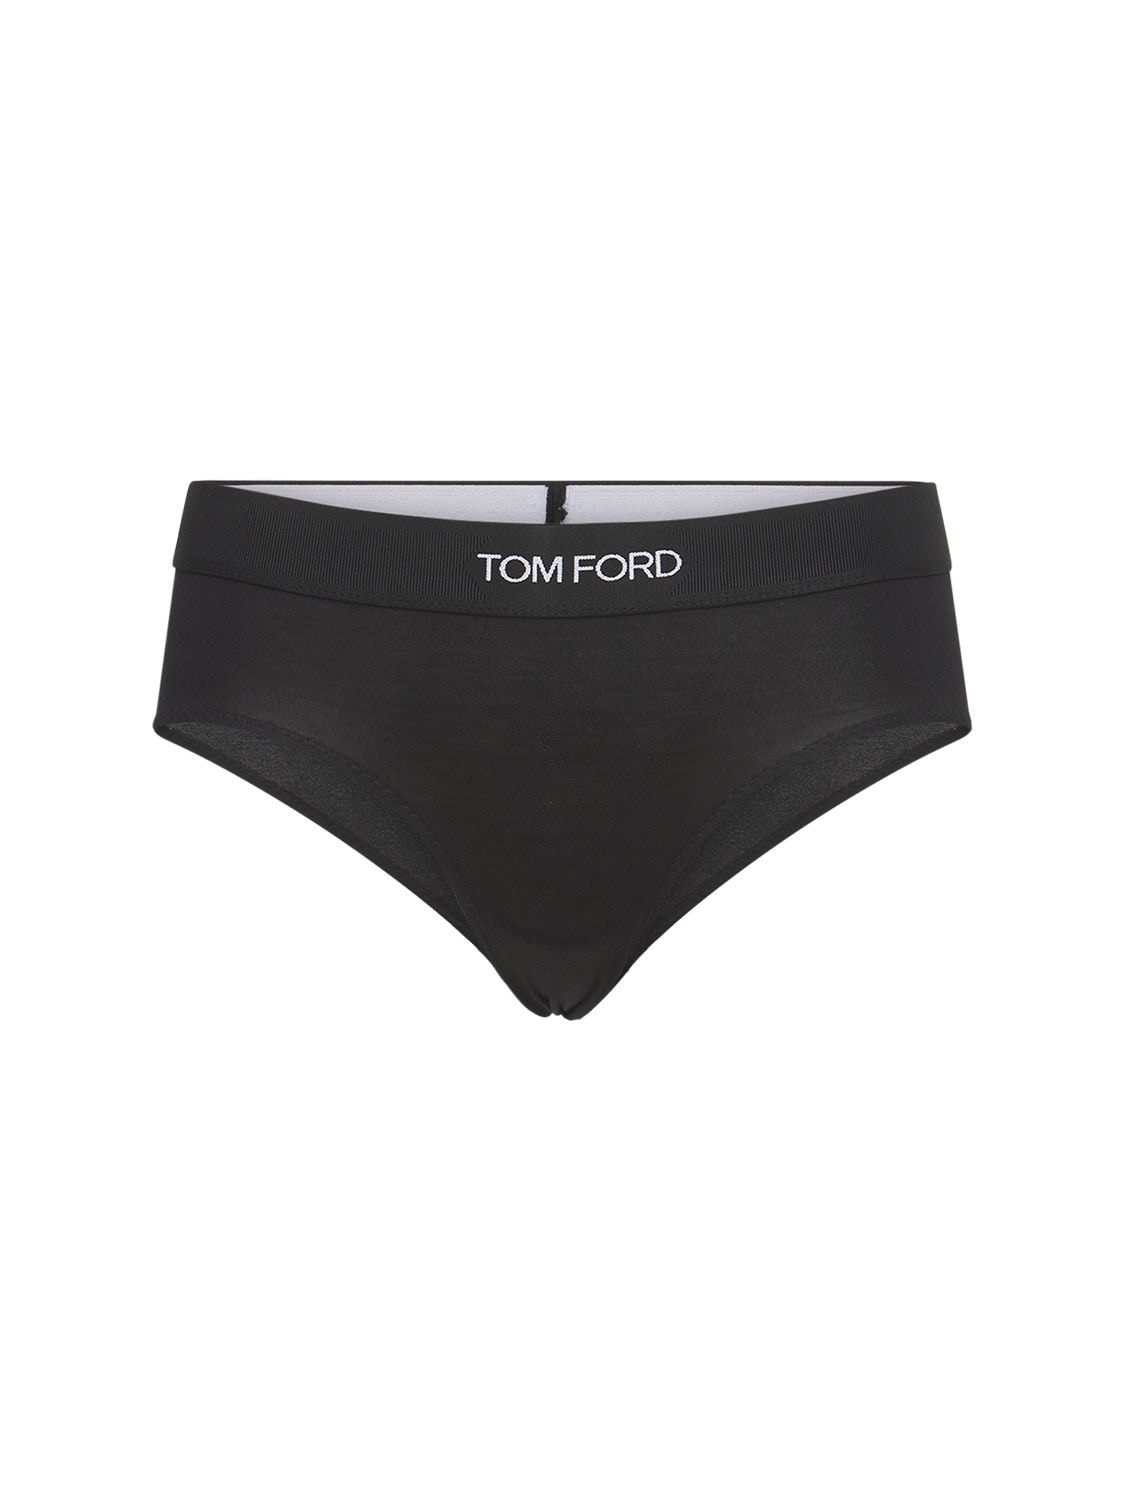 TOM FORD LOGO平纹针织内裤,74IMBJ019-TEI5OTK1